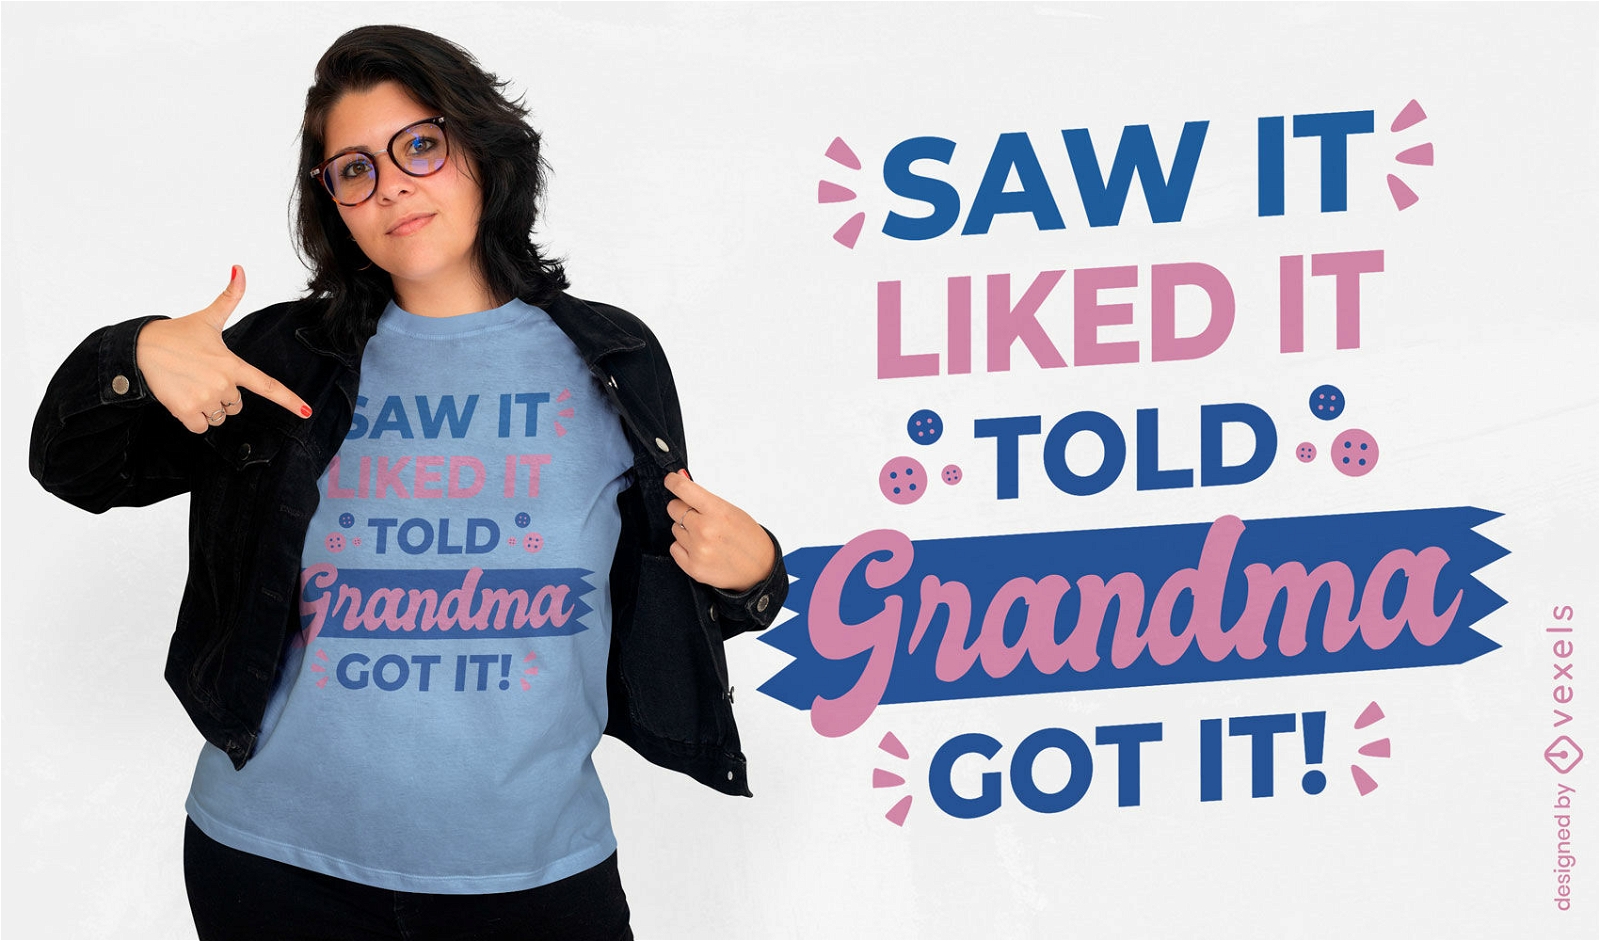 Grandma funny quote t-shirt design